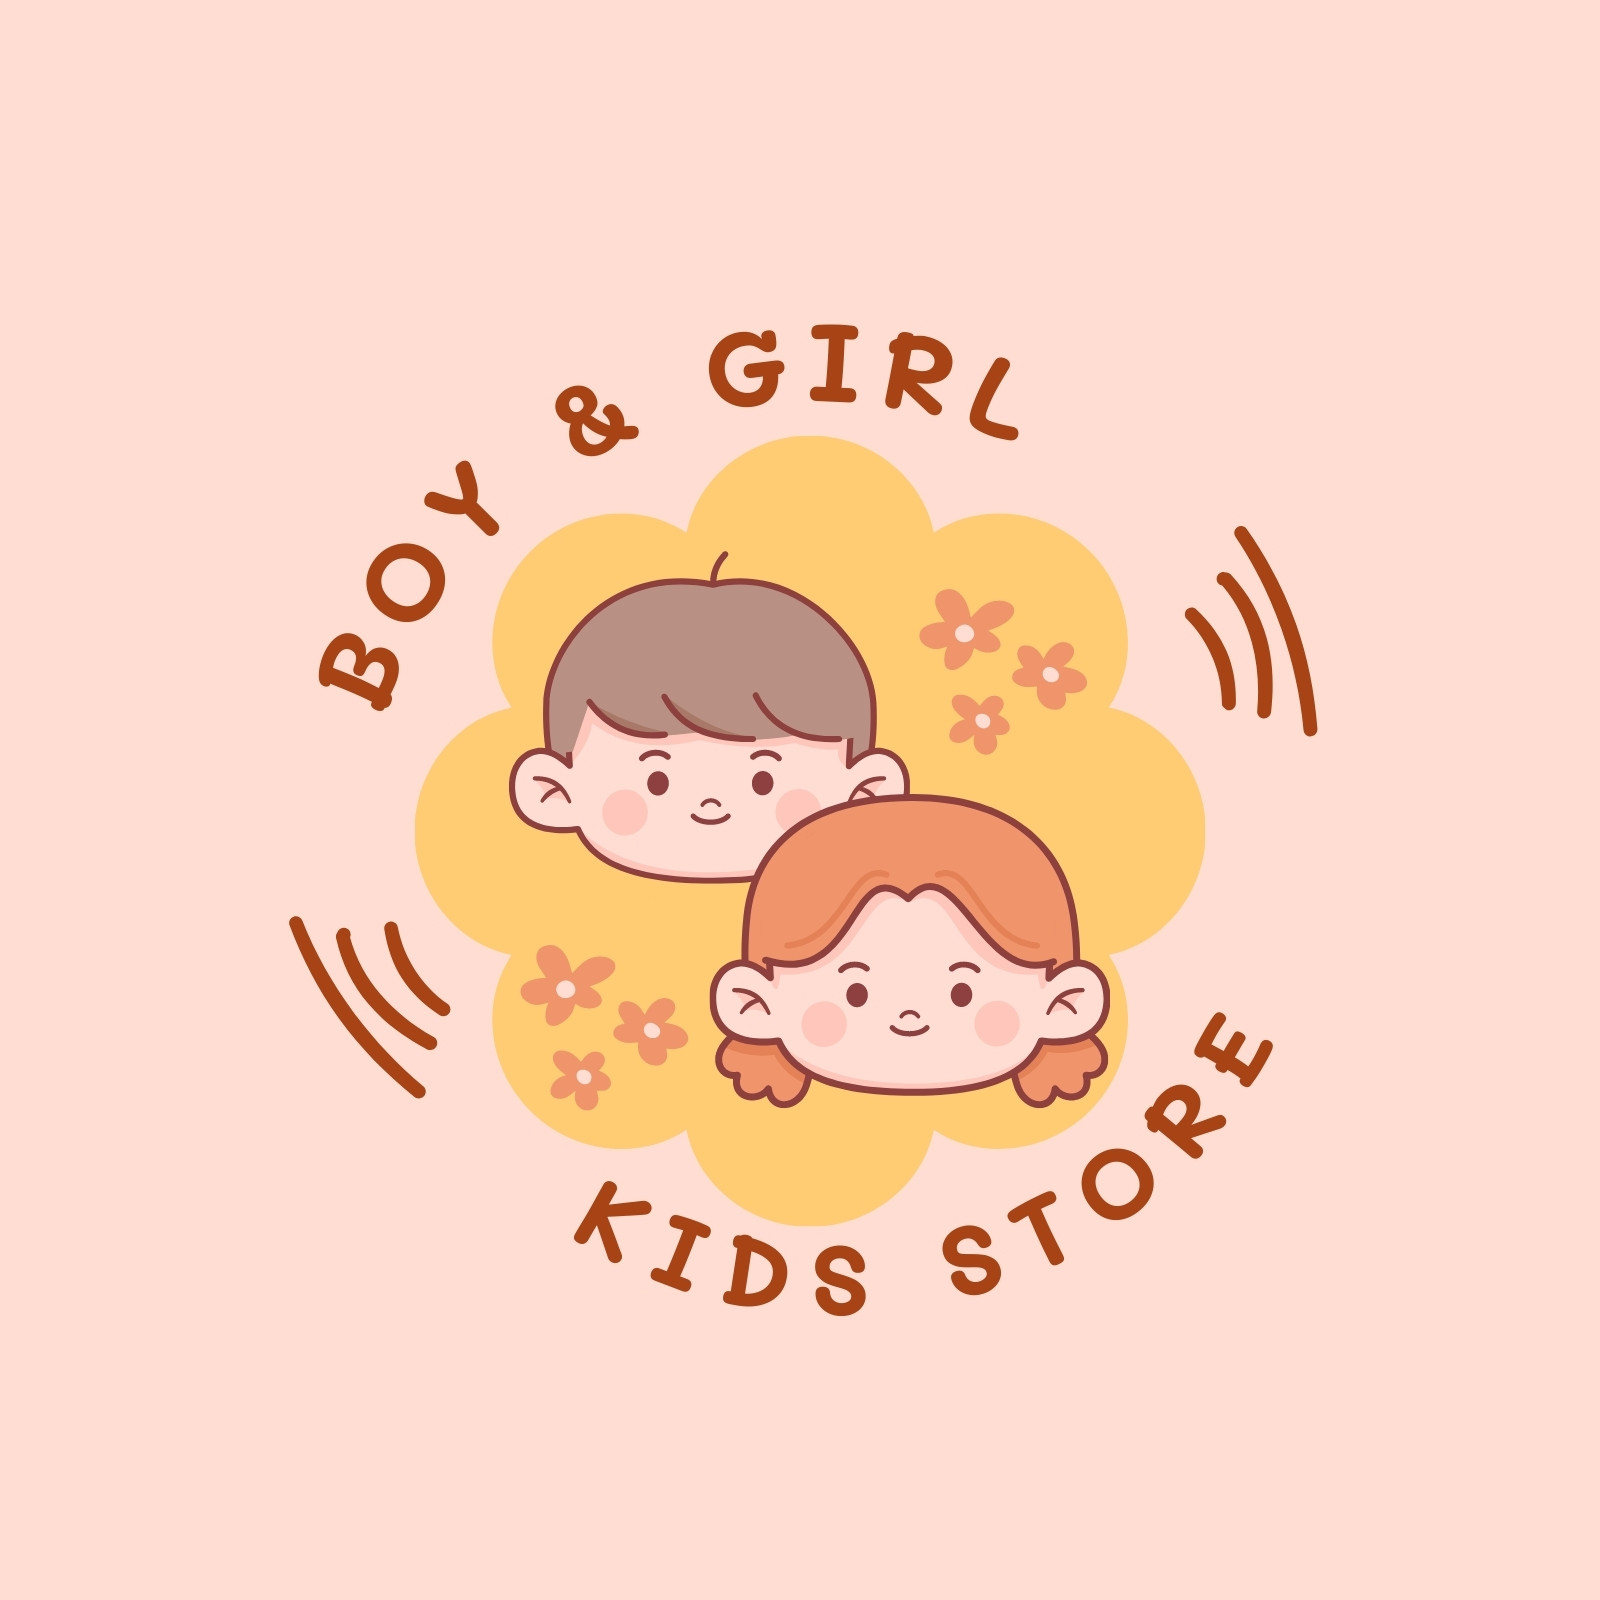 Boy and Girl logo with Trademark symbol by kalebdeviant on DeviantArt